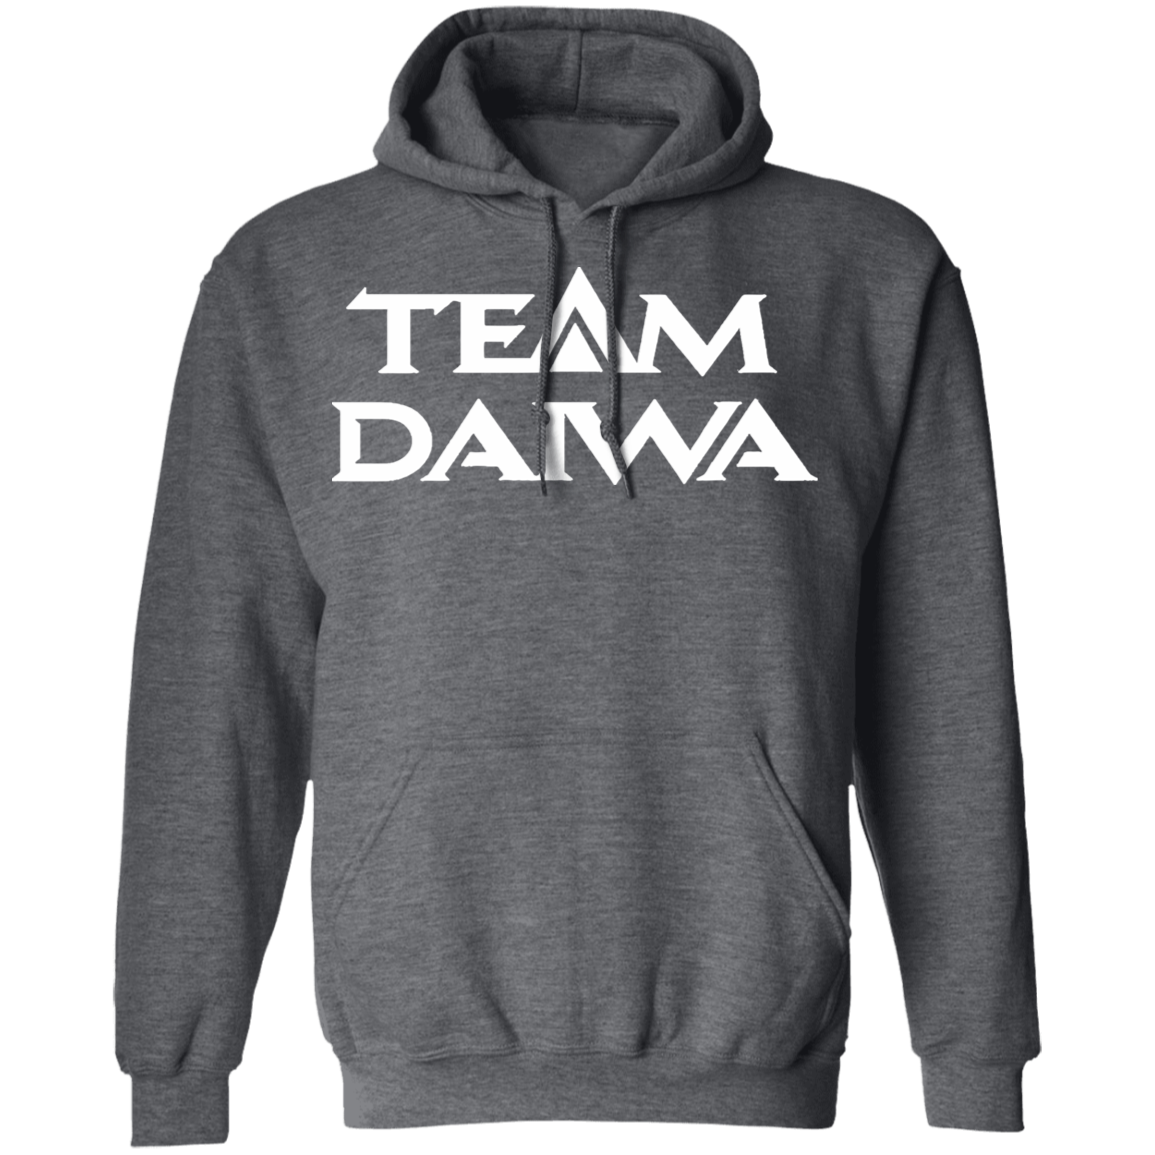 Team Daiwa Hoodie - Diana T-shirt